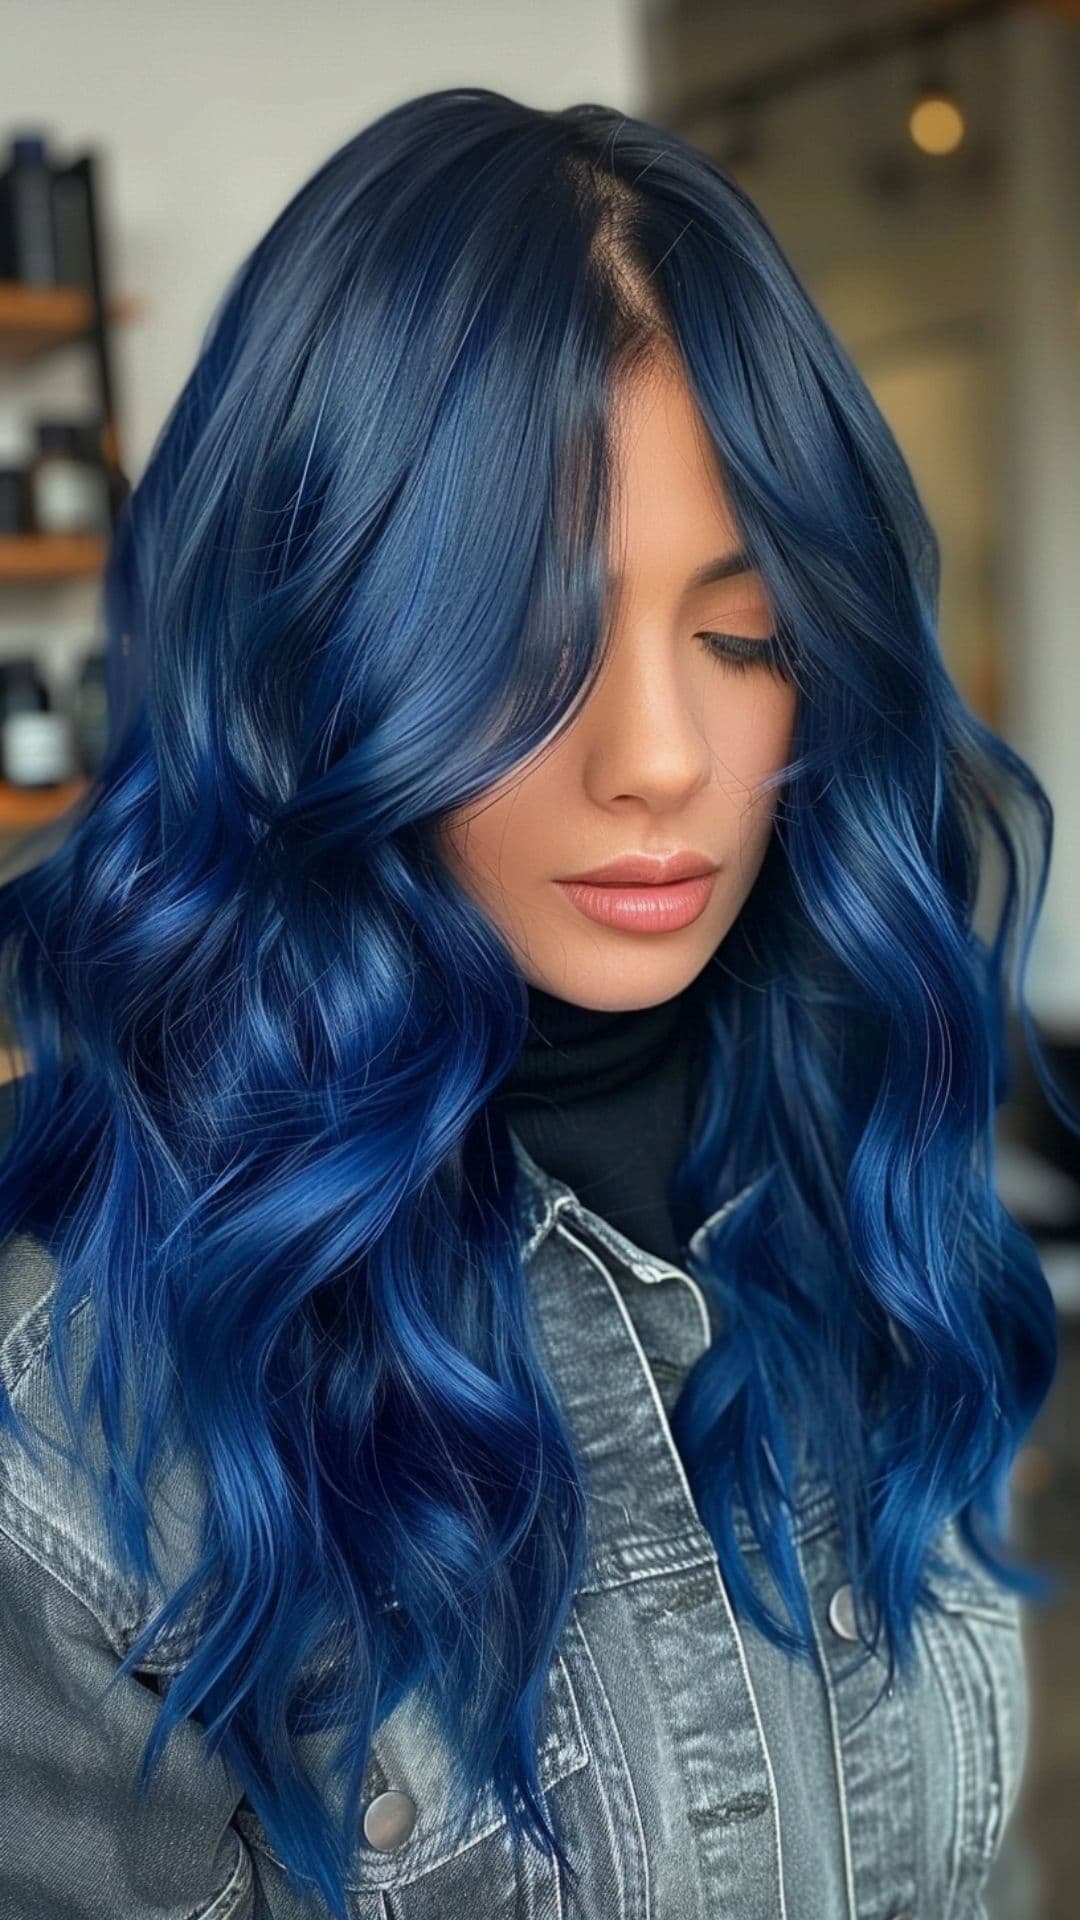 A woman modelling a midnight blue hair.